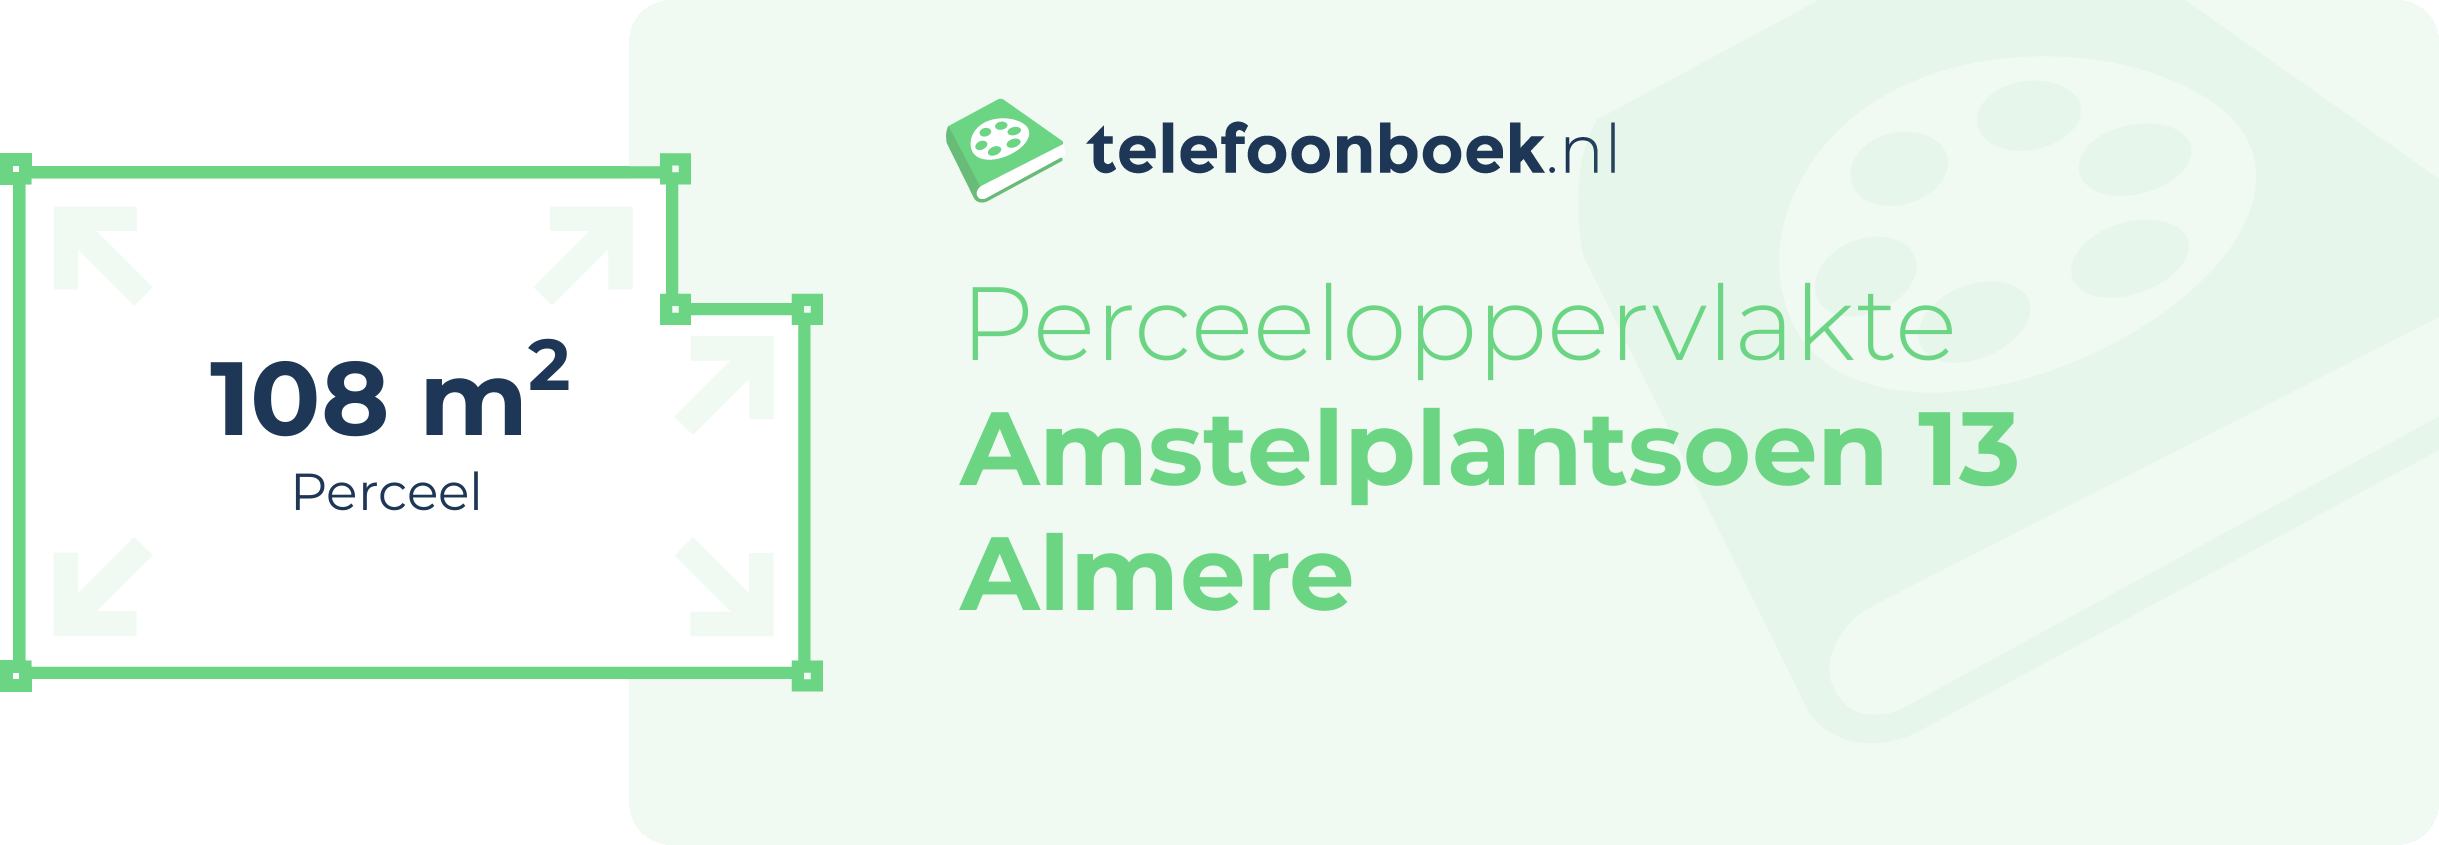 Perceeloppervlakte Amstelplantsoen 13 Almere